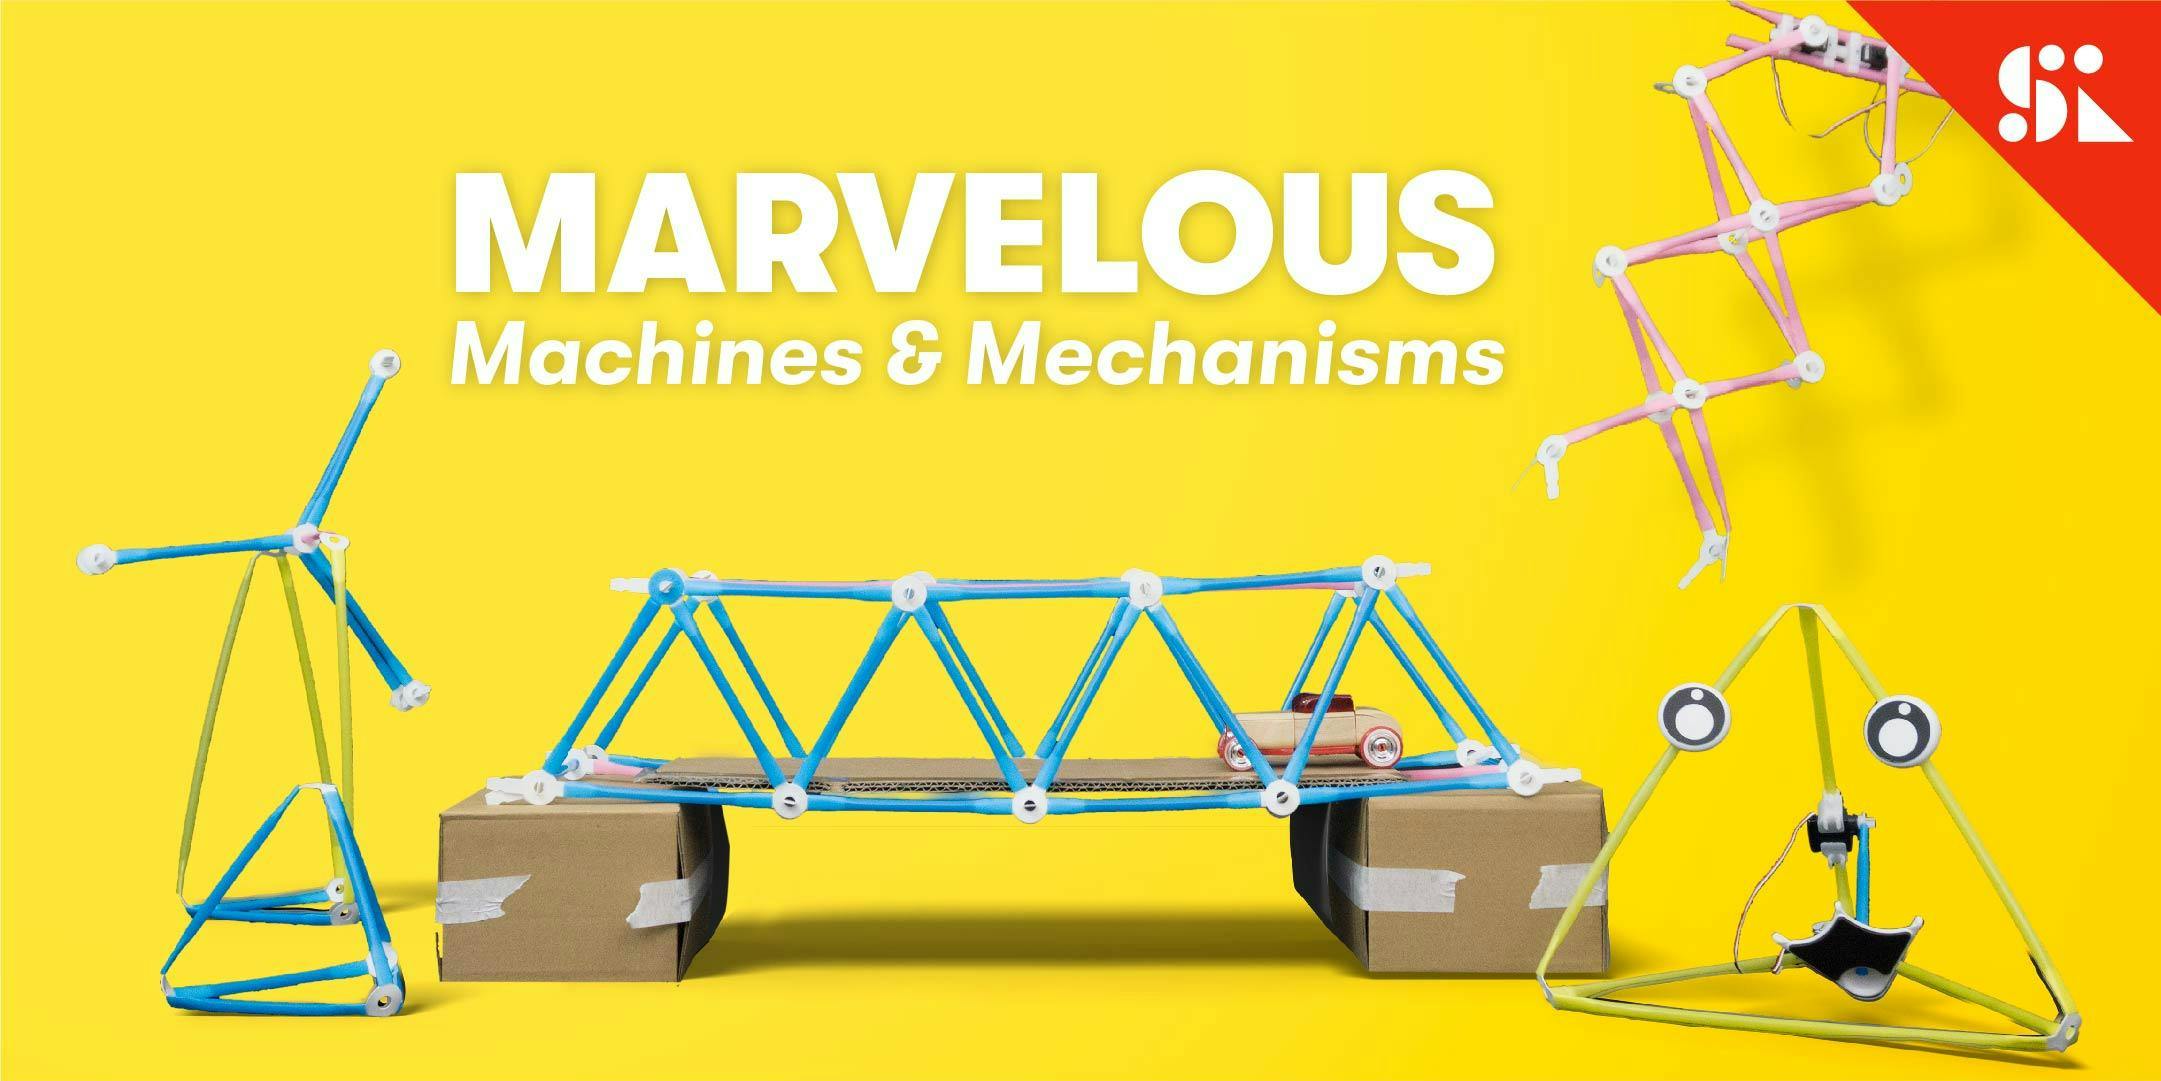 Marvelous Machines & Mechanisms, [Ages 7-10], 25 Nov - 29 Nov Holiday Camp (9:30AM) @ Thomson